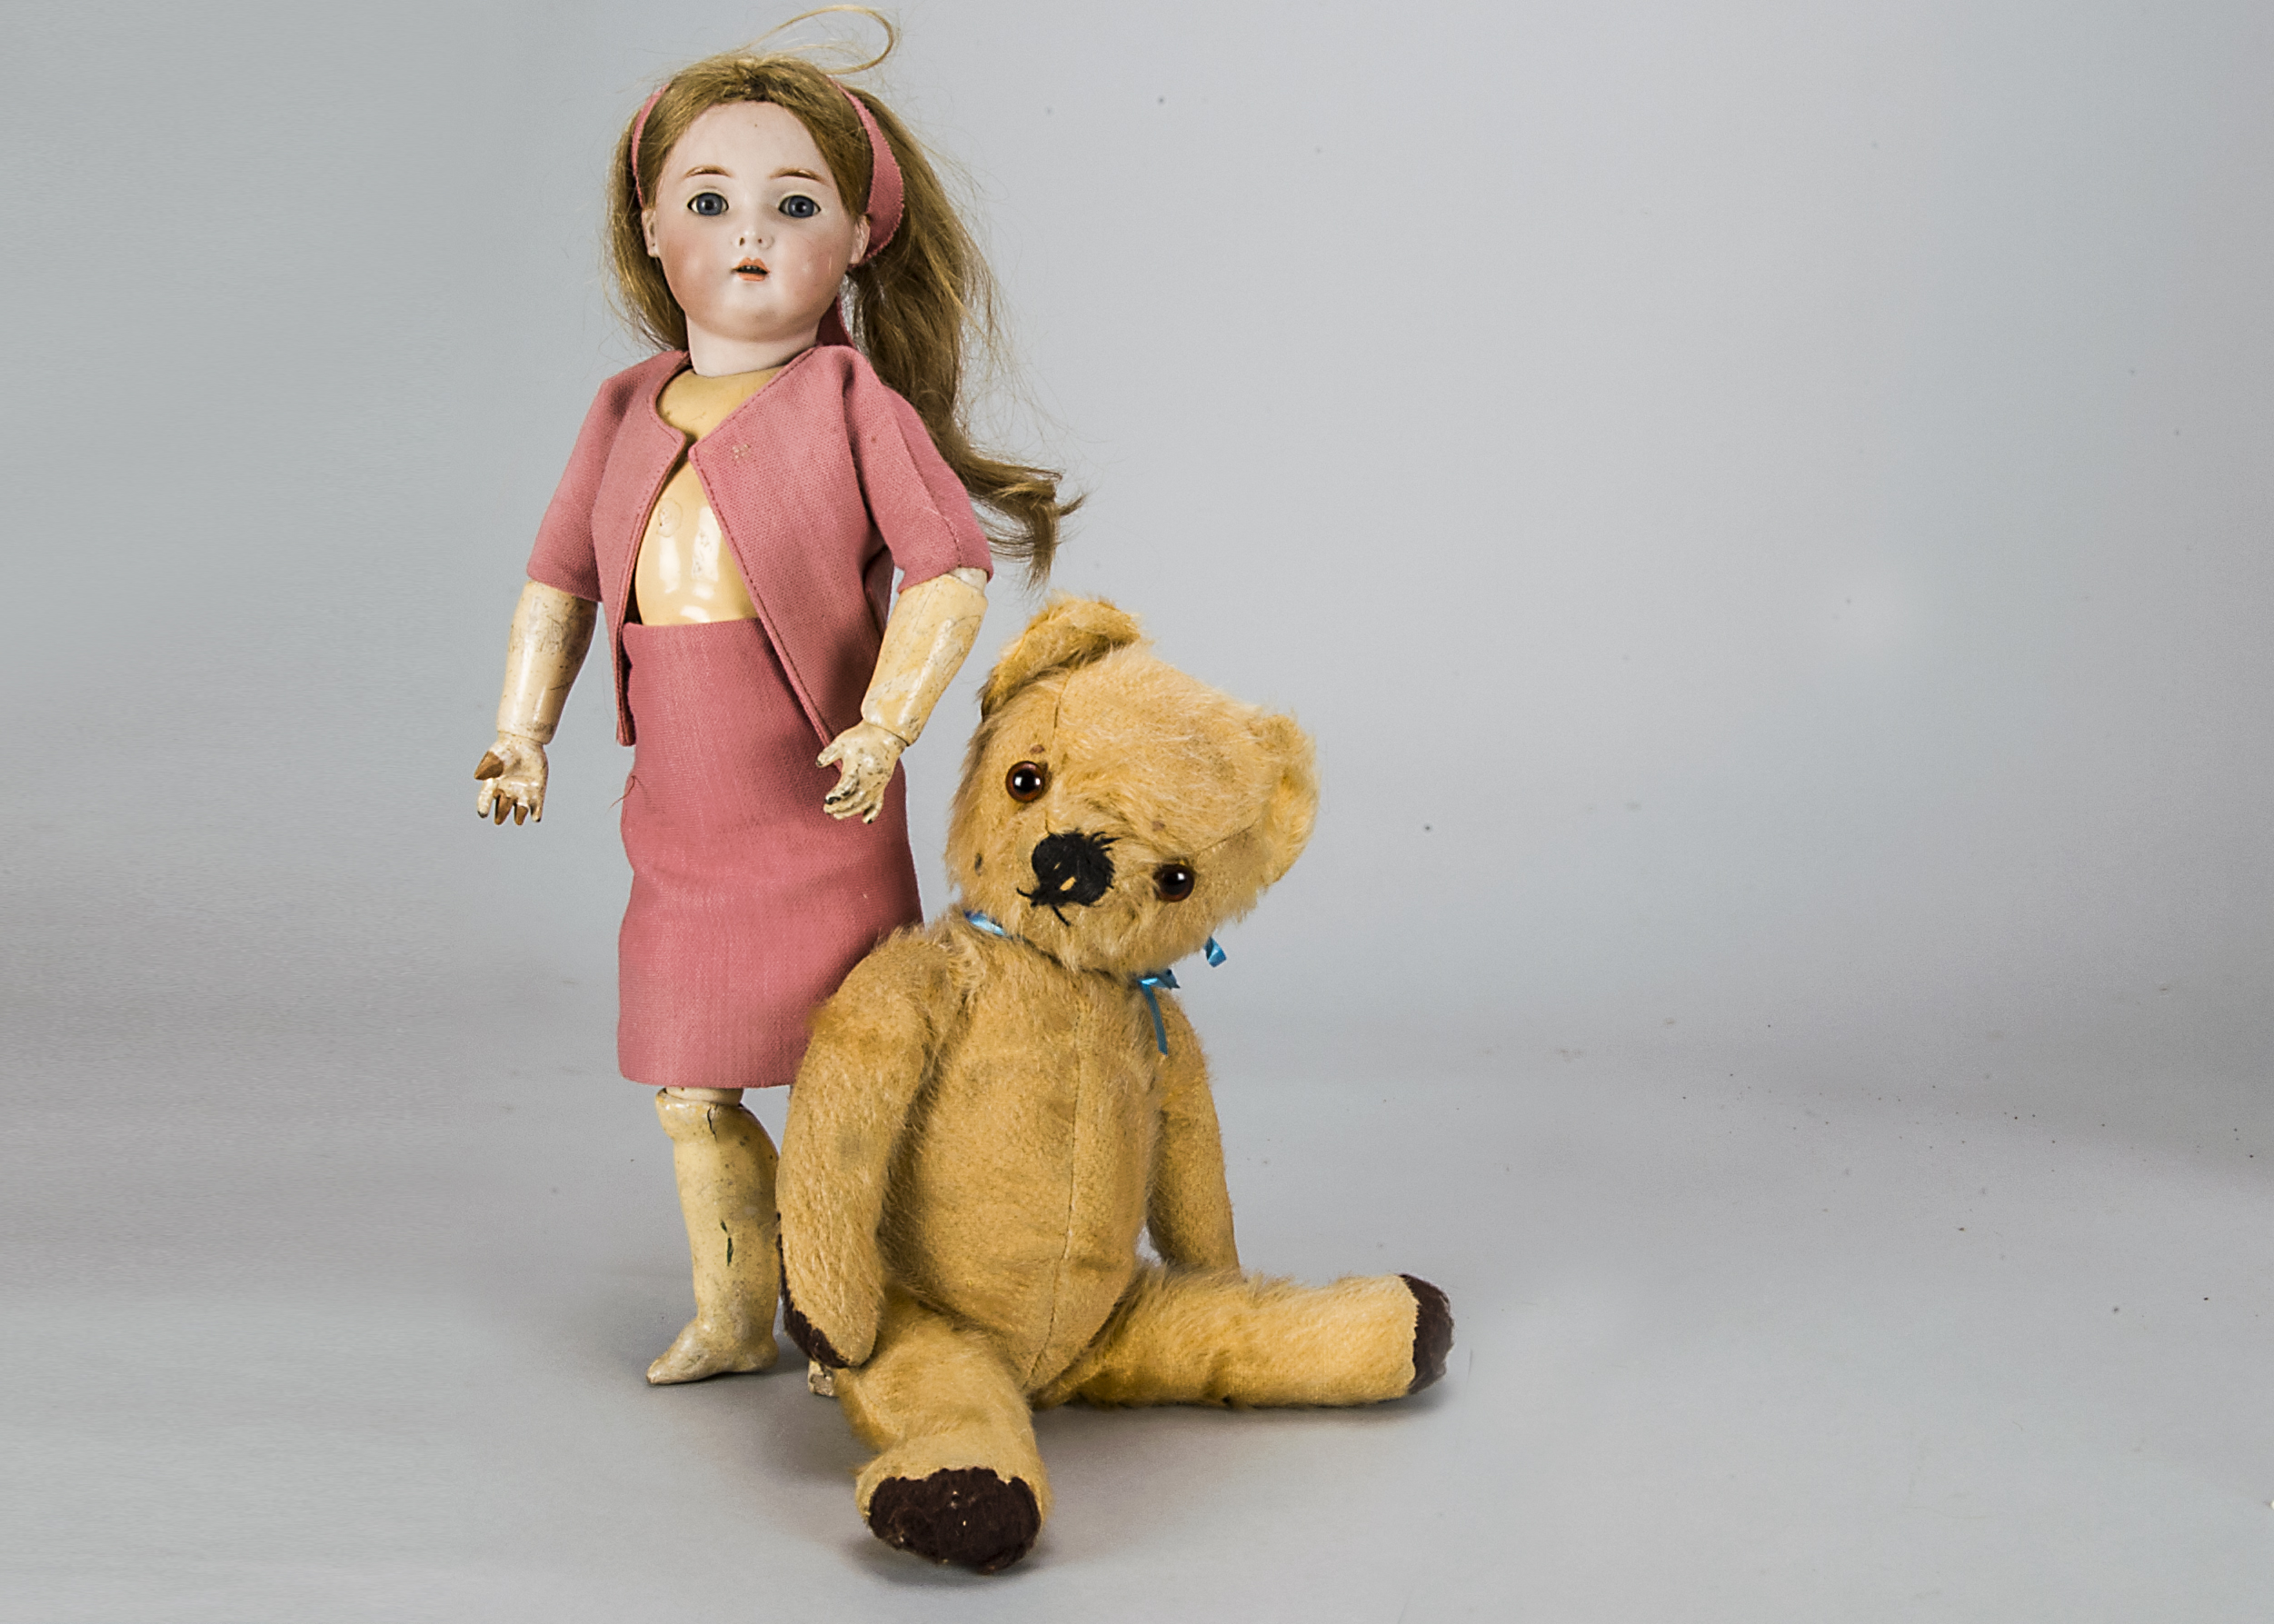 A Simon & Halbig for Kammer & Reinhardt child doll, with blonde sleeping eyes, pierced ears,